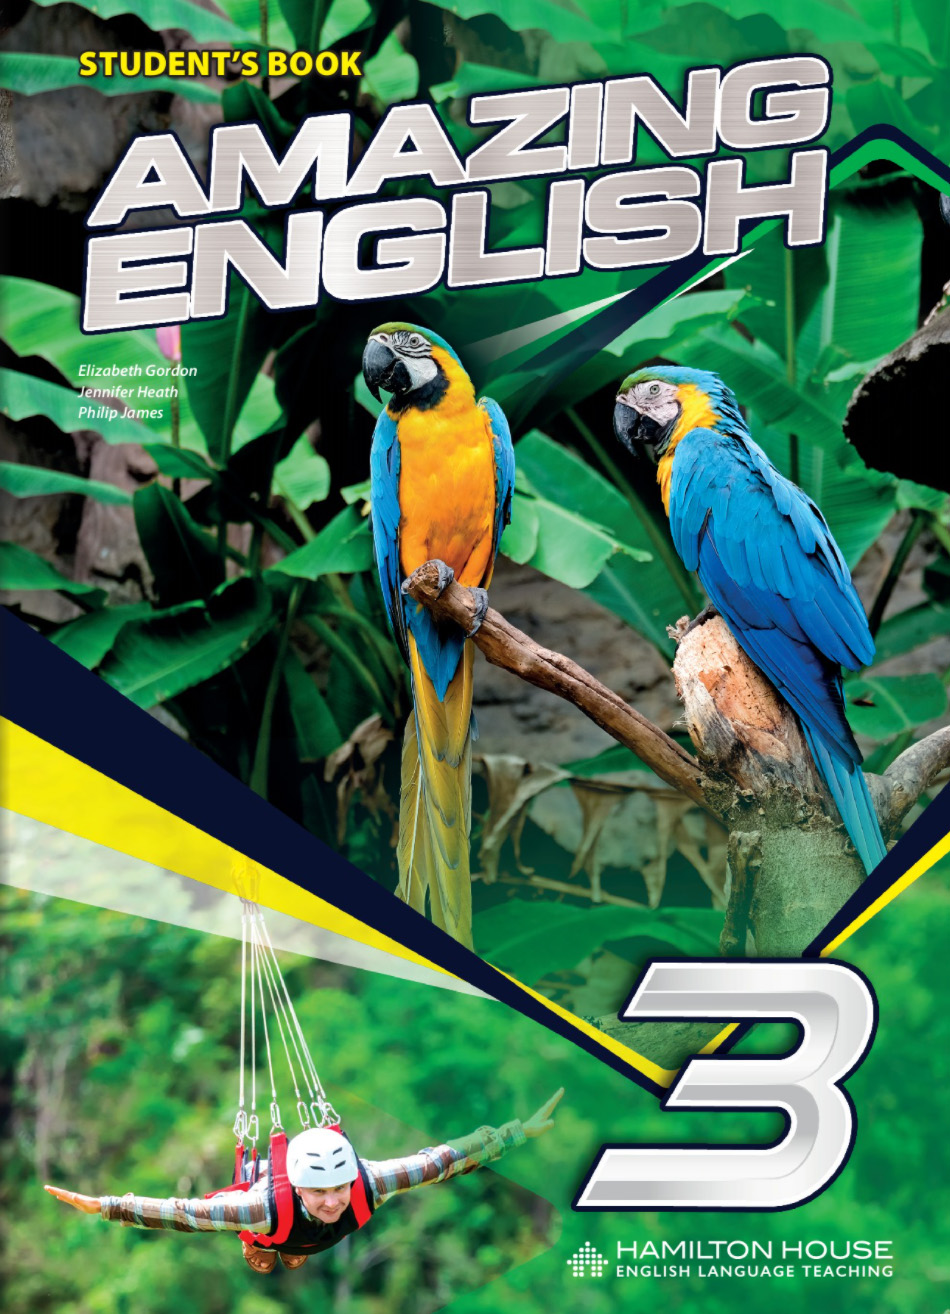 Amazing English 3 Student\'s Book | Elizabeth Gordon, Jennifer Heath, Philip James